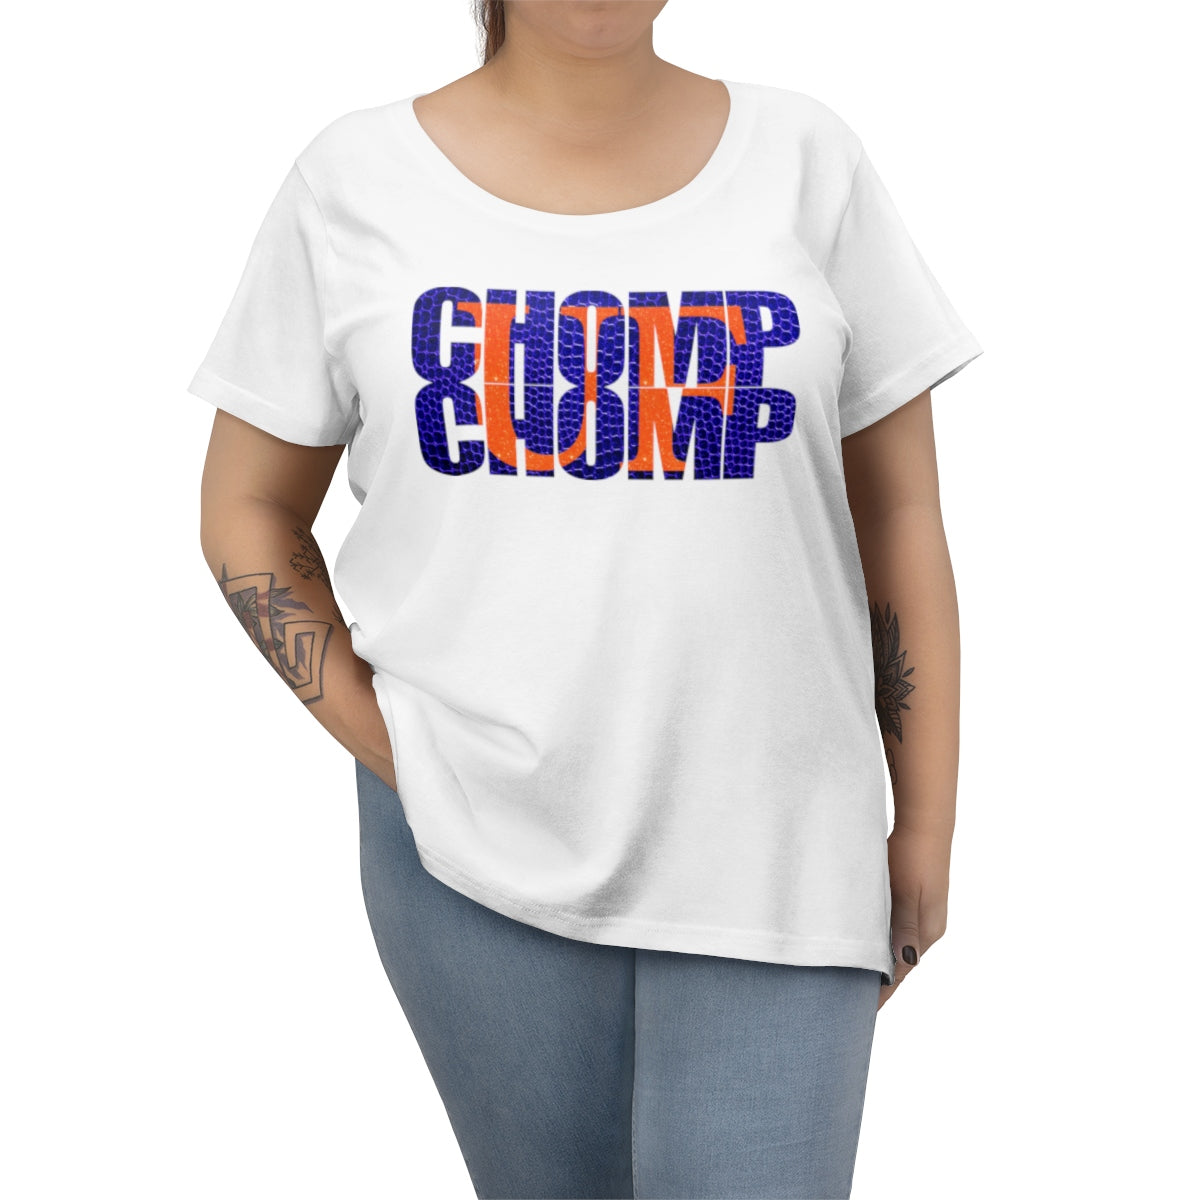 Florida Chomp Chomp Women's Curvy Tee